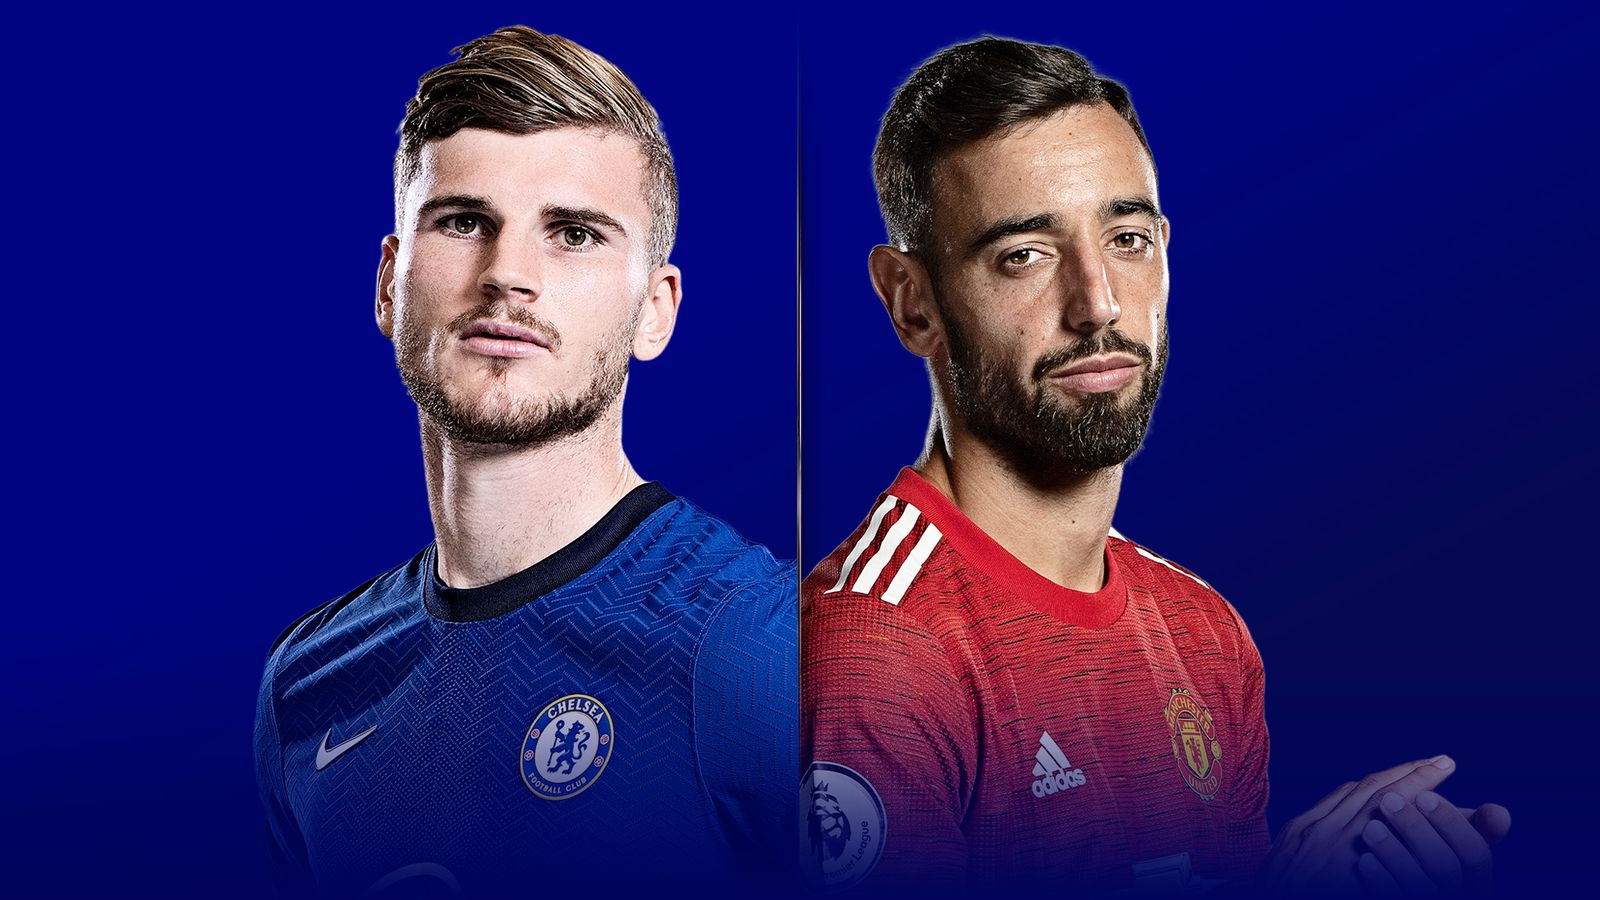 Live match preview - Chelsea vs Man Utd 28.02.2021